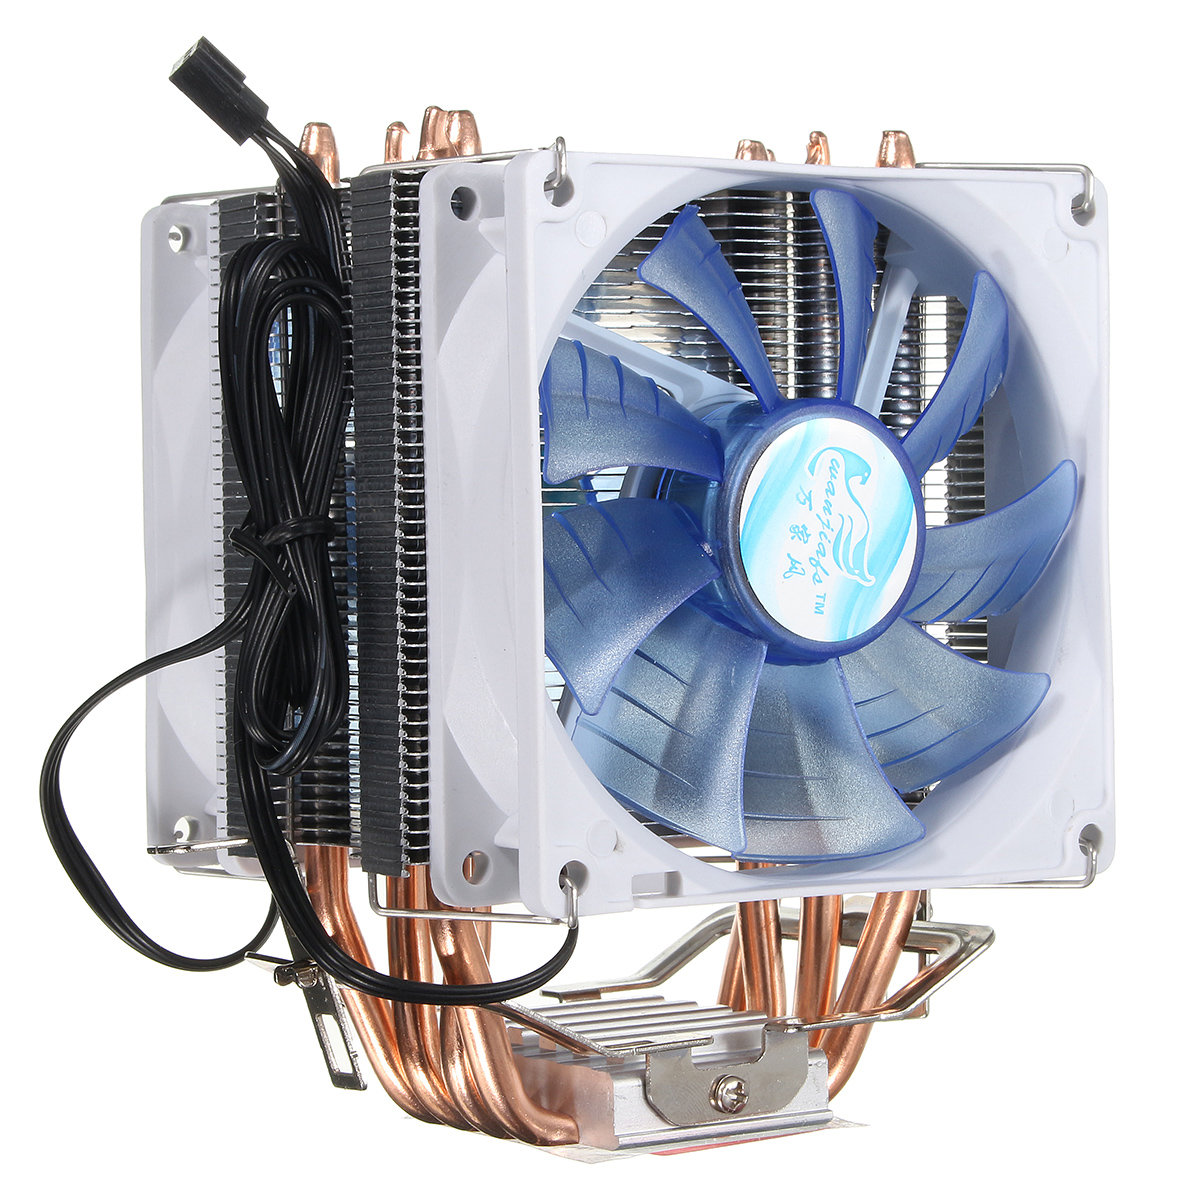 

92mm 3 Pin Blue LED Copper CPU Cooler Cooling Fan Heat Sink for Intel LGA775/1156/1155 AMD AM2/2+/3